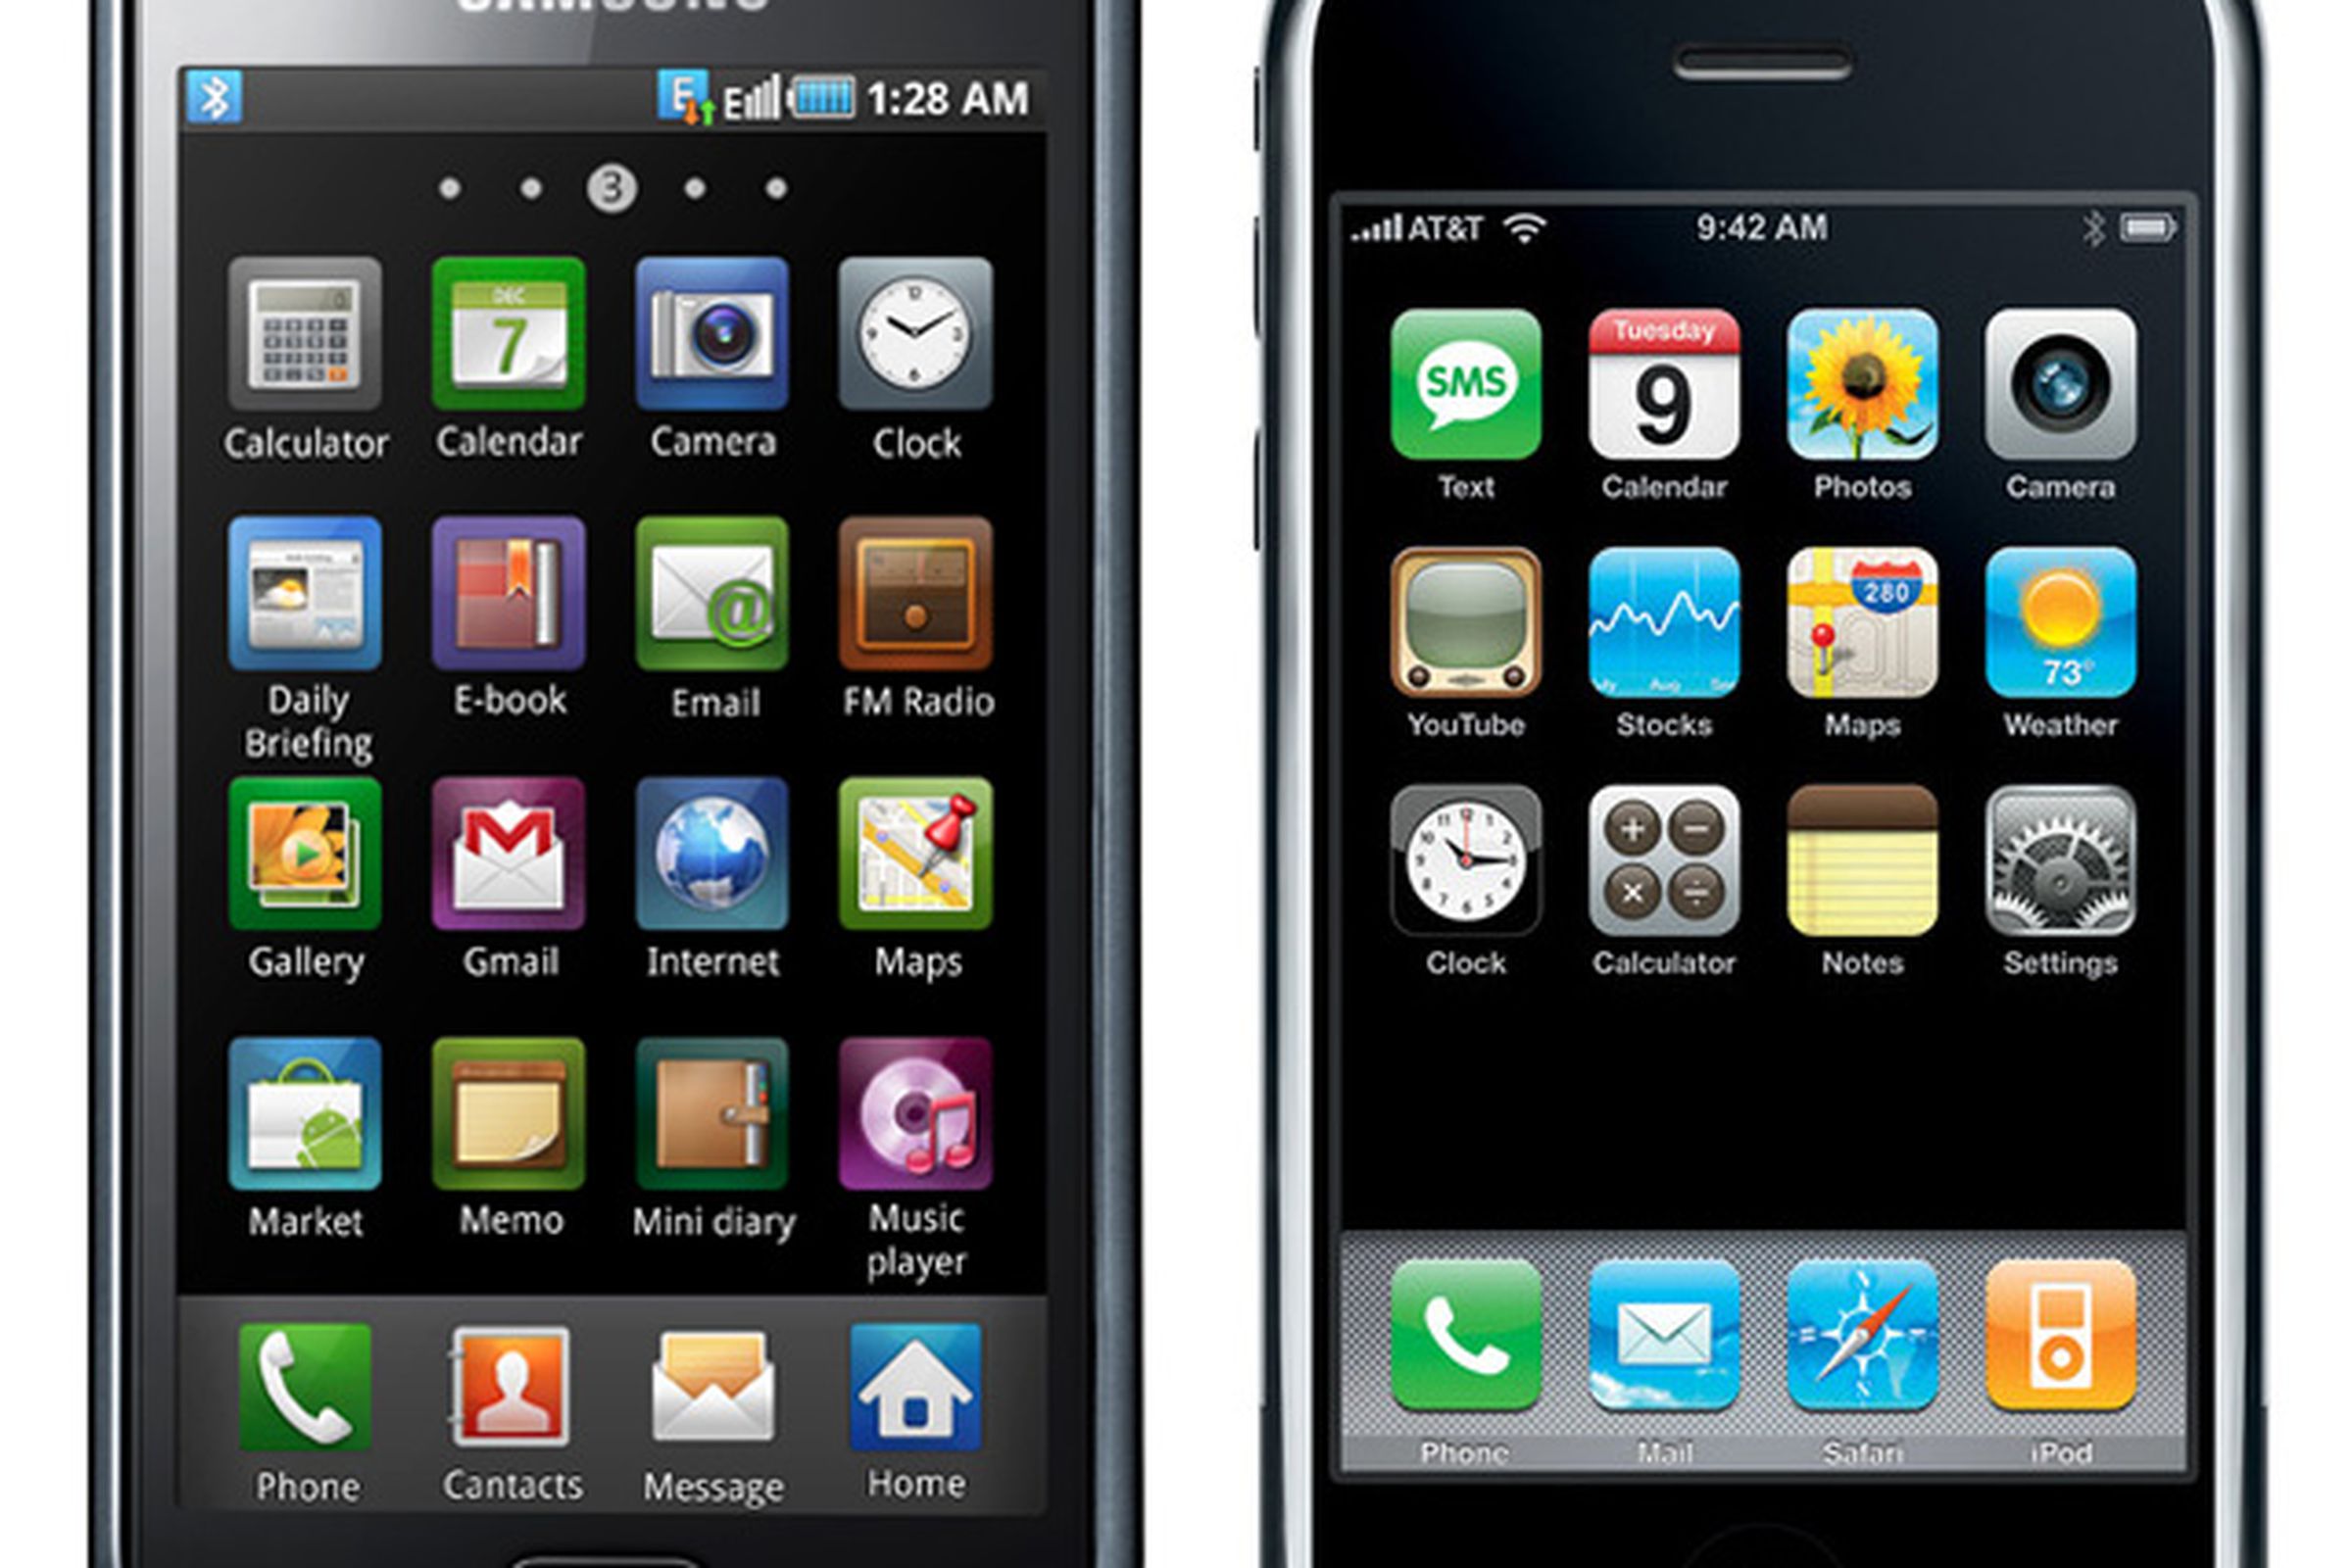 Galaxy S and original iPhone